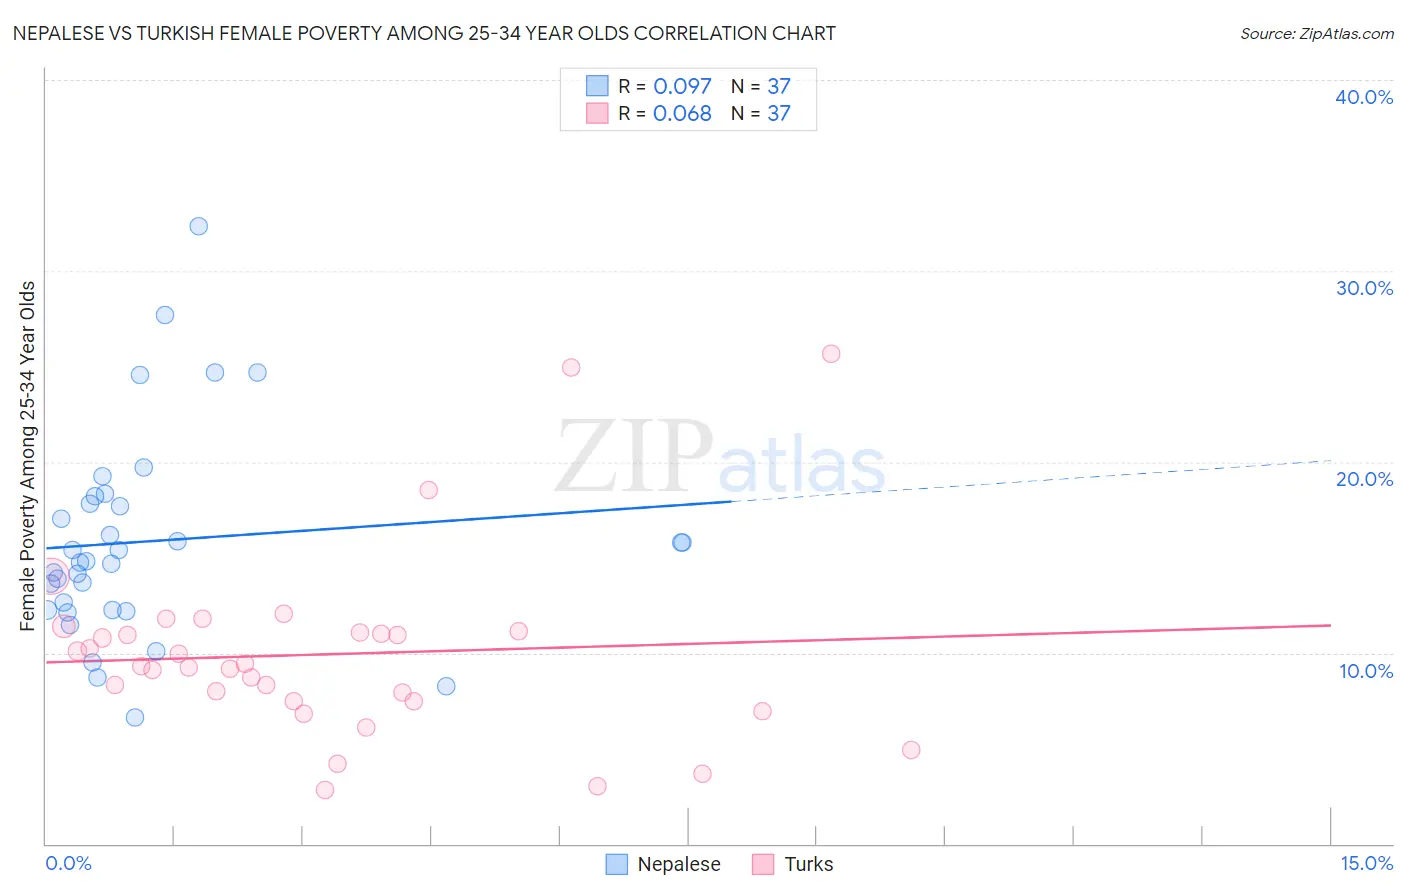 Nepalese vs Turkish Female Poverty Among 25-34 Year Olds